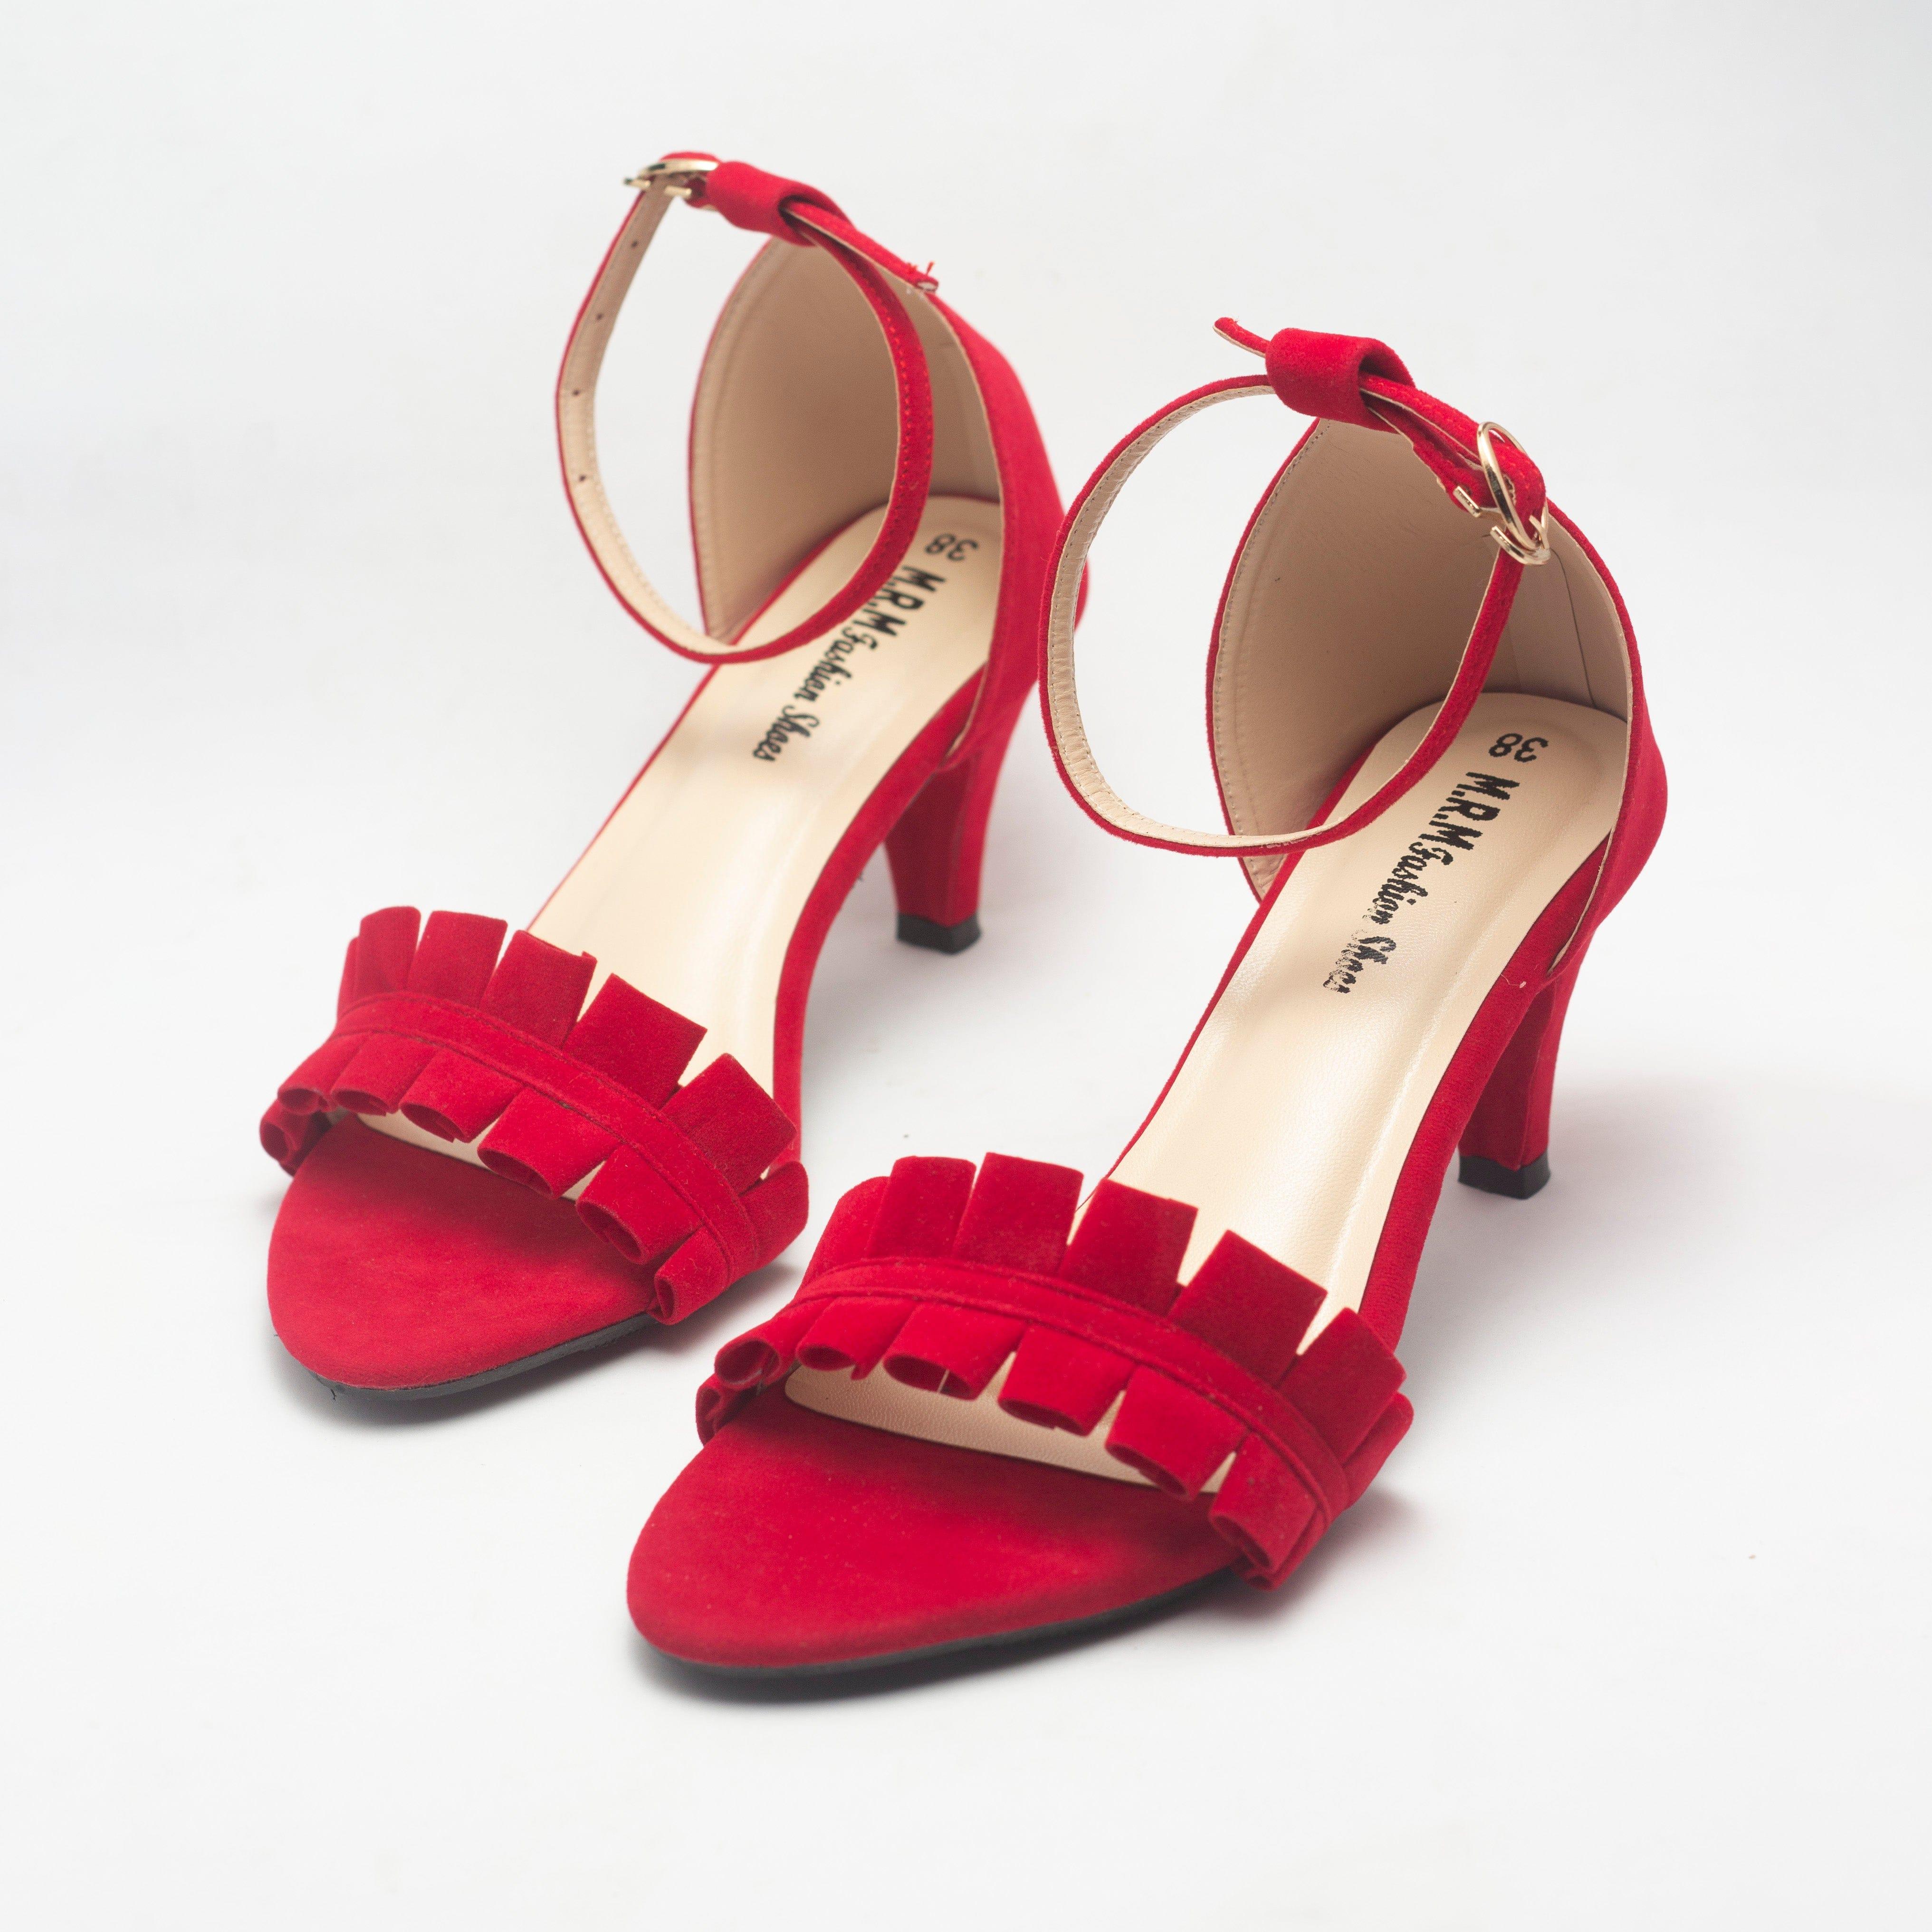 Stylish Heels For Women And Girls, Designer Sandal, Women Sandal, fancy  sandal, लेडीज सैंडल, महिलाओं की सैंडल - Prizon, Kishanganj | ID:  2850379871133